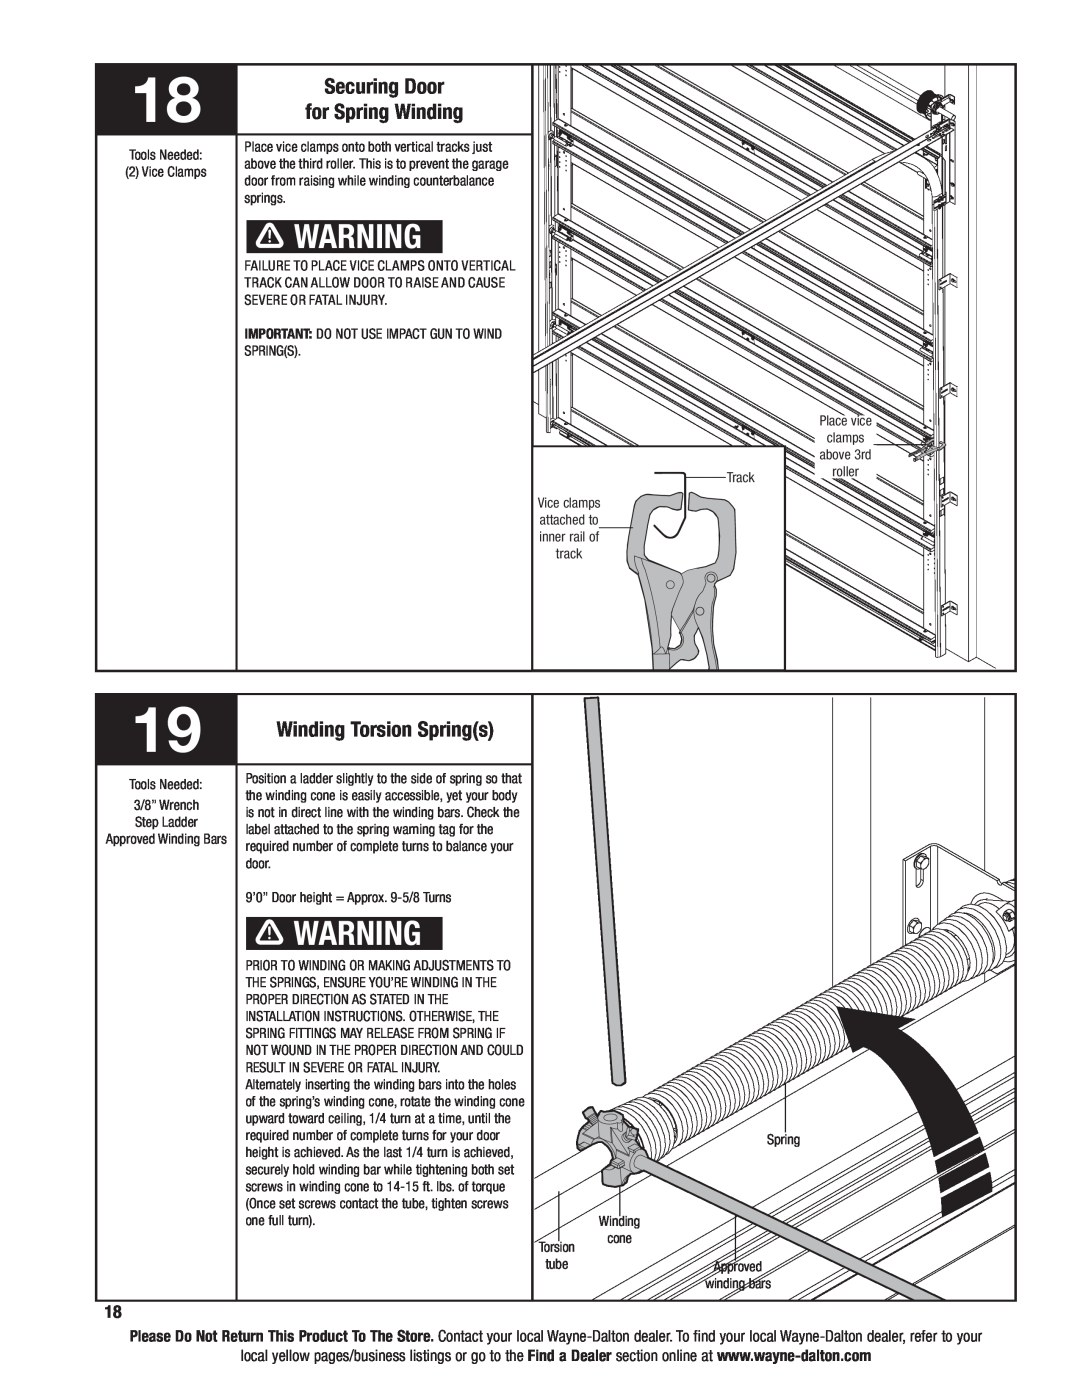 Wayne-Dalton 6100 installation instructions Securing Door, Winding Torsion Springs, for Spring Winding 